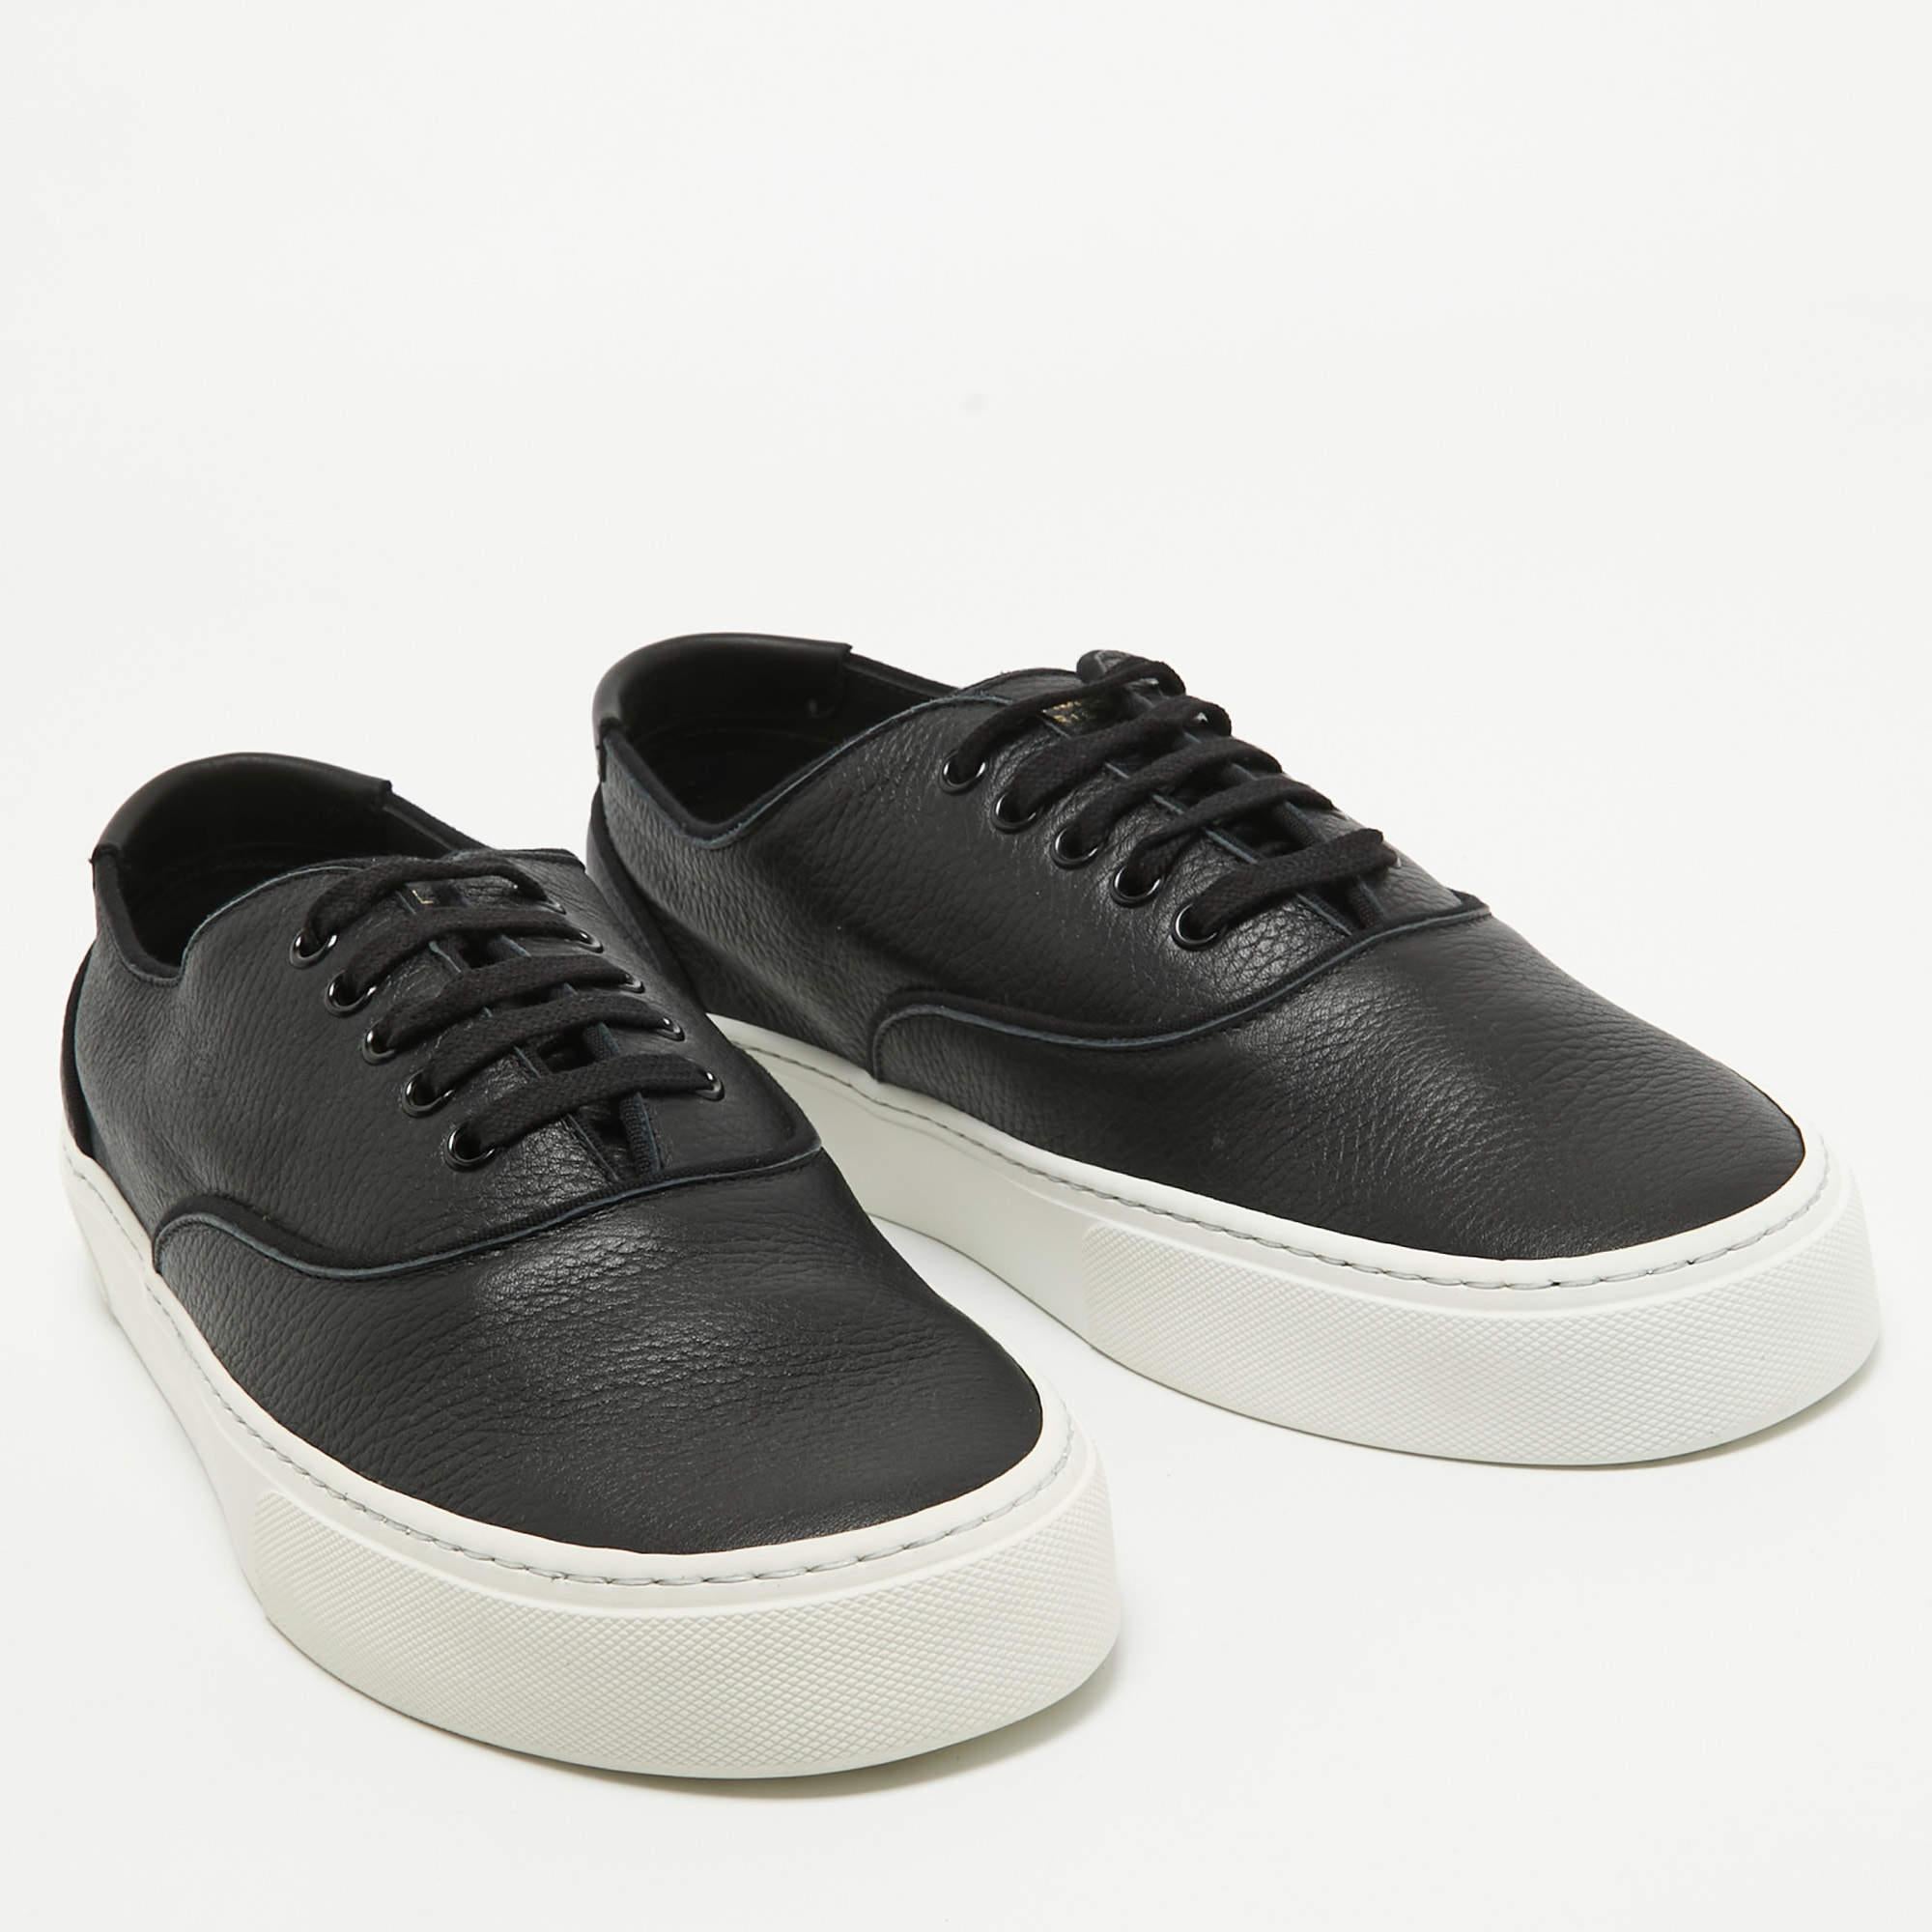 Saint Laurent Black Leather Low Top Sneakers Size 45 3